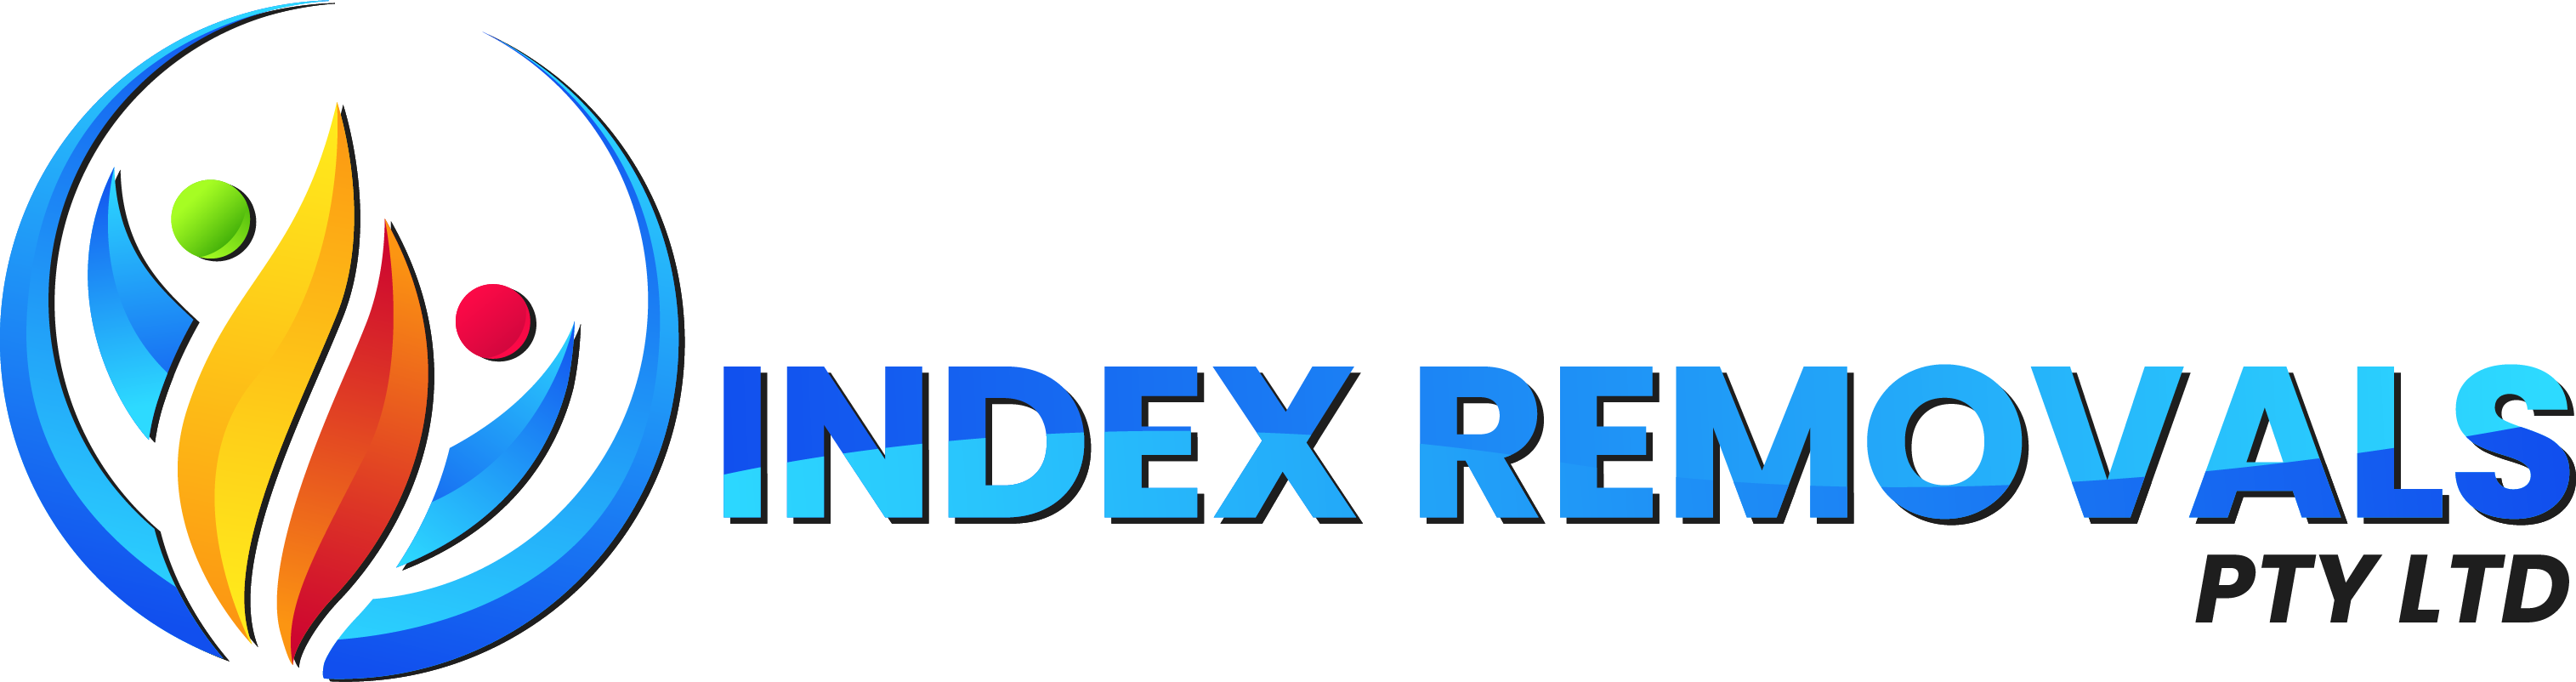 Index Removals Logo